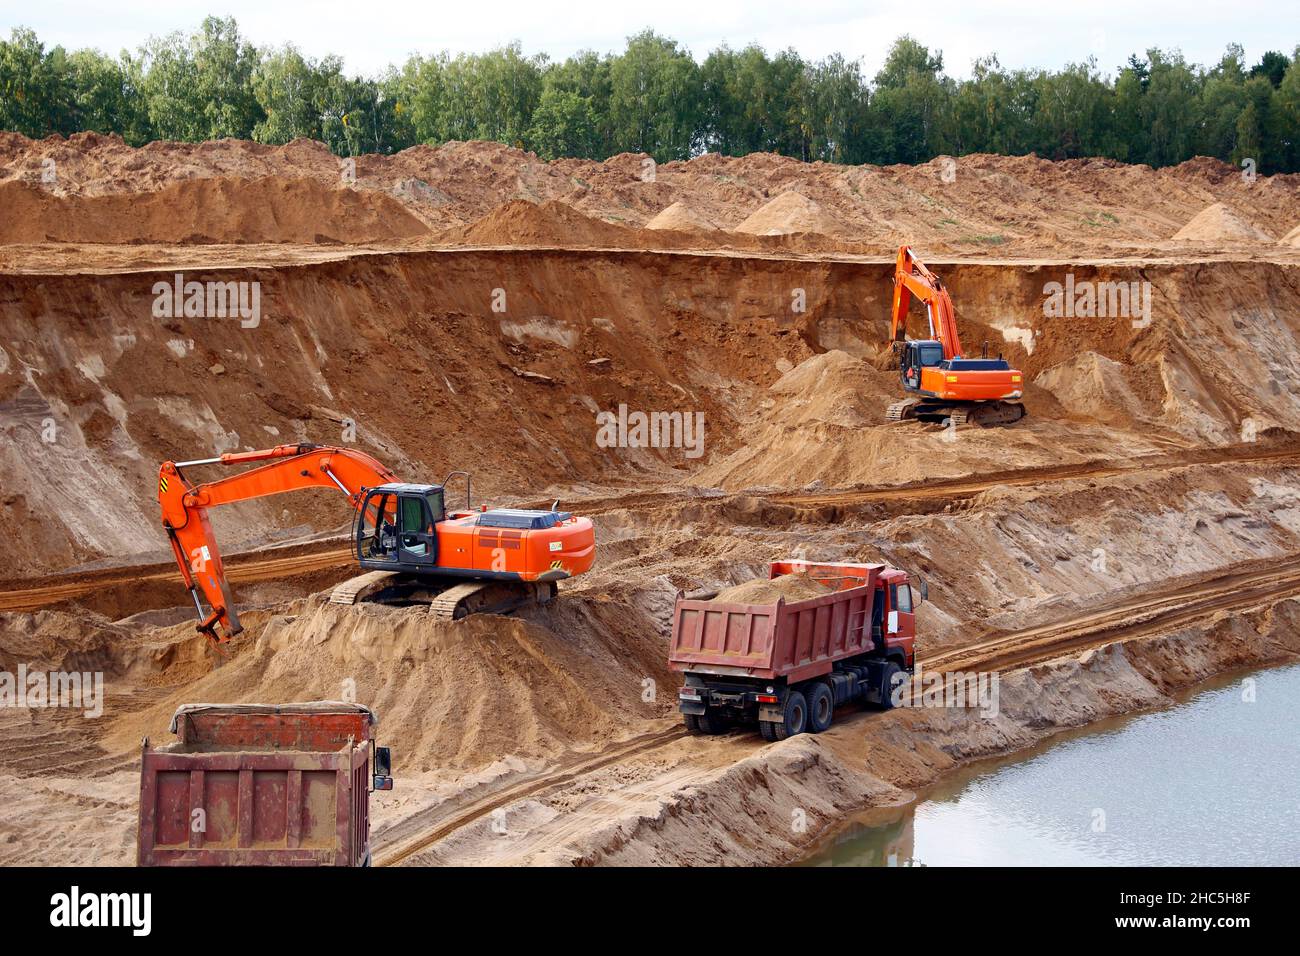 Loading sand into trucks on the sandy career, Mining. Excavators and trucks Stock Photo